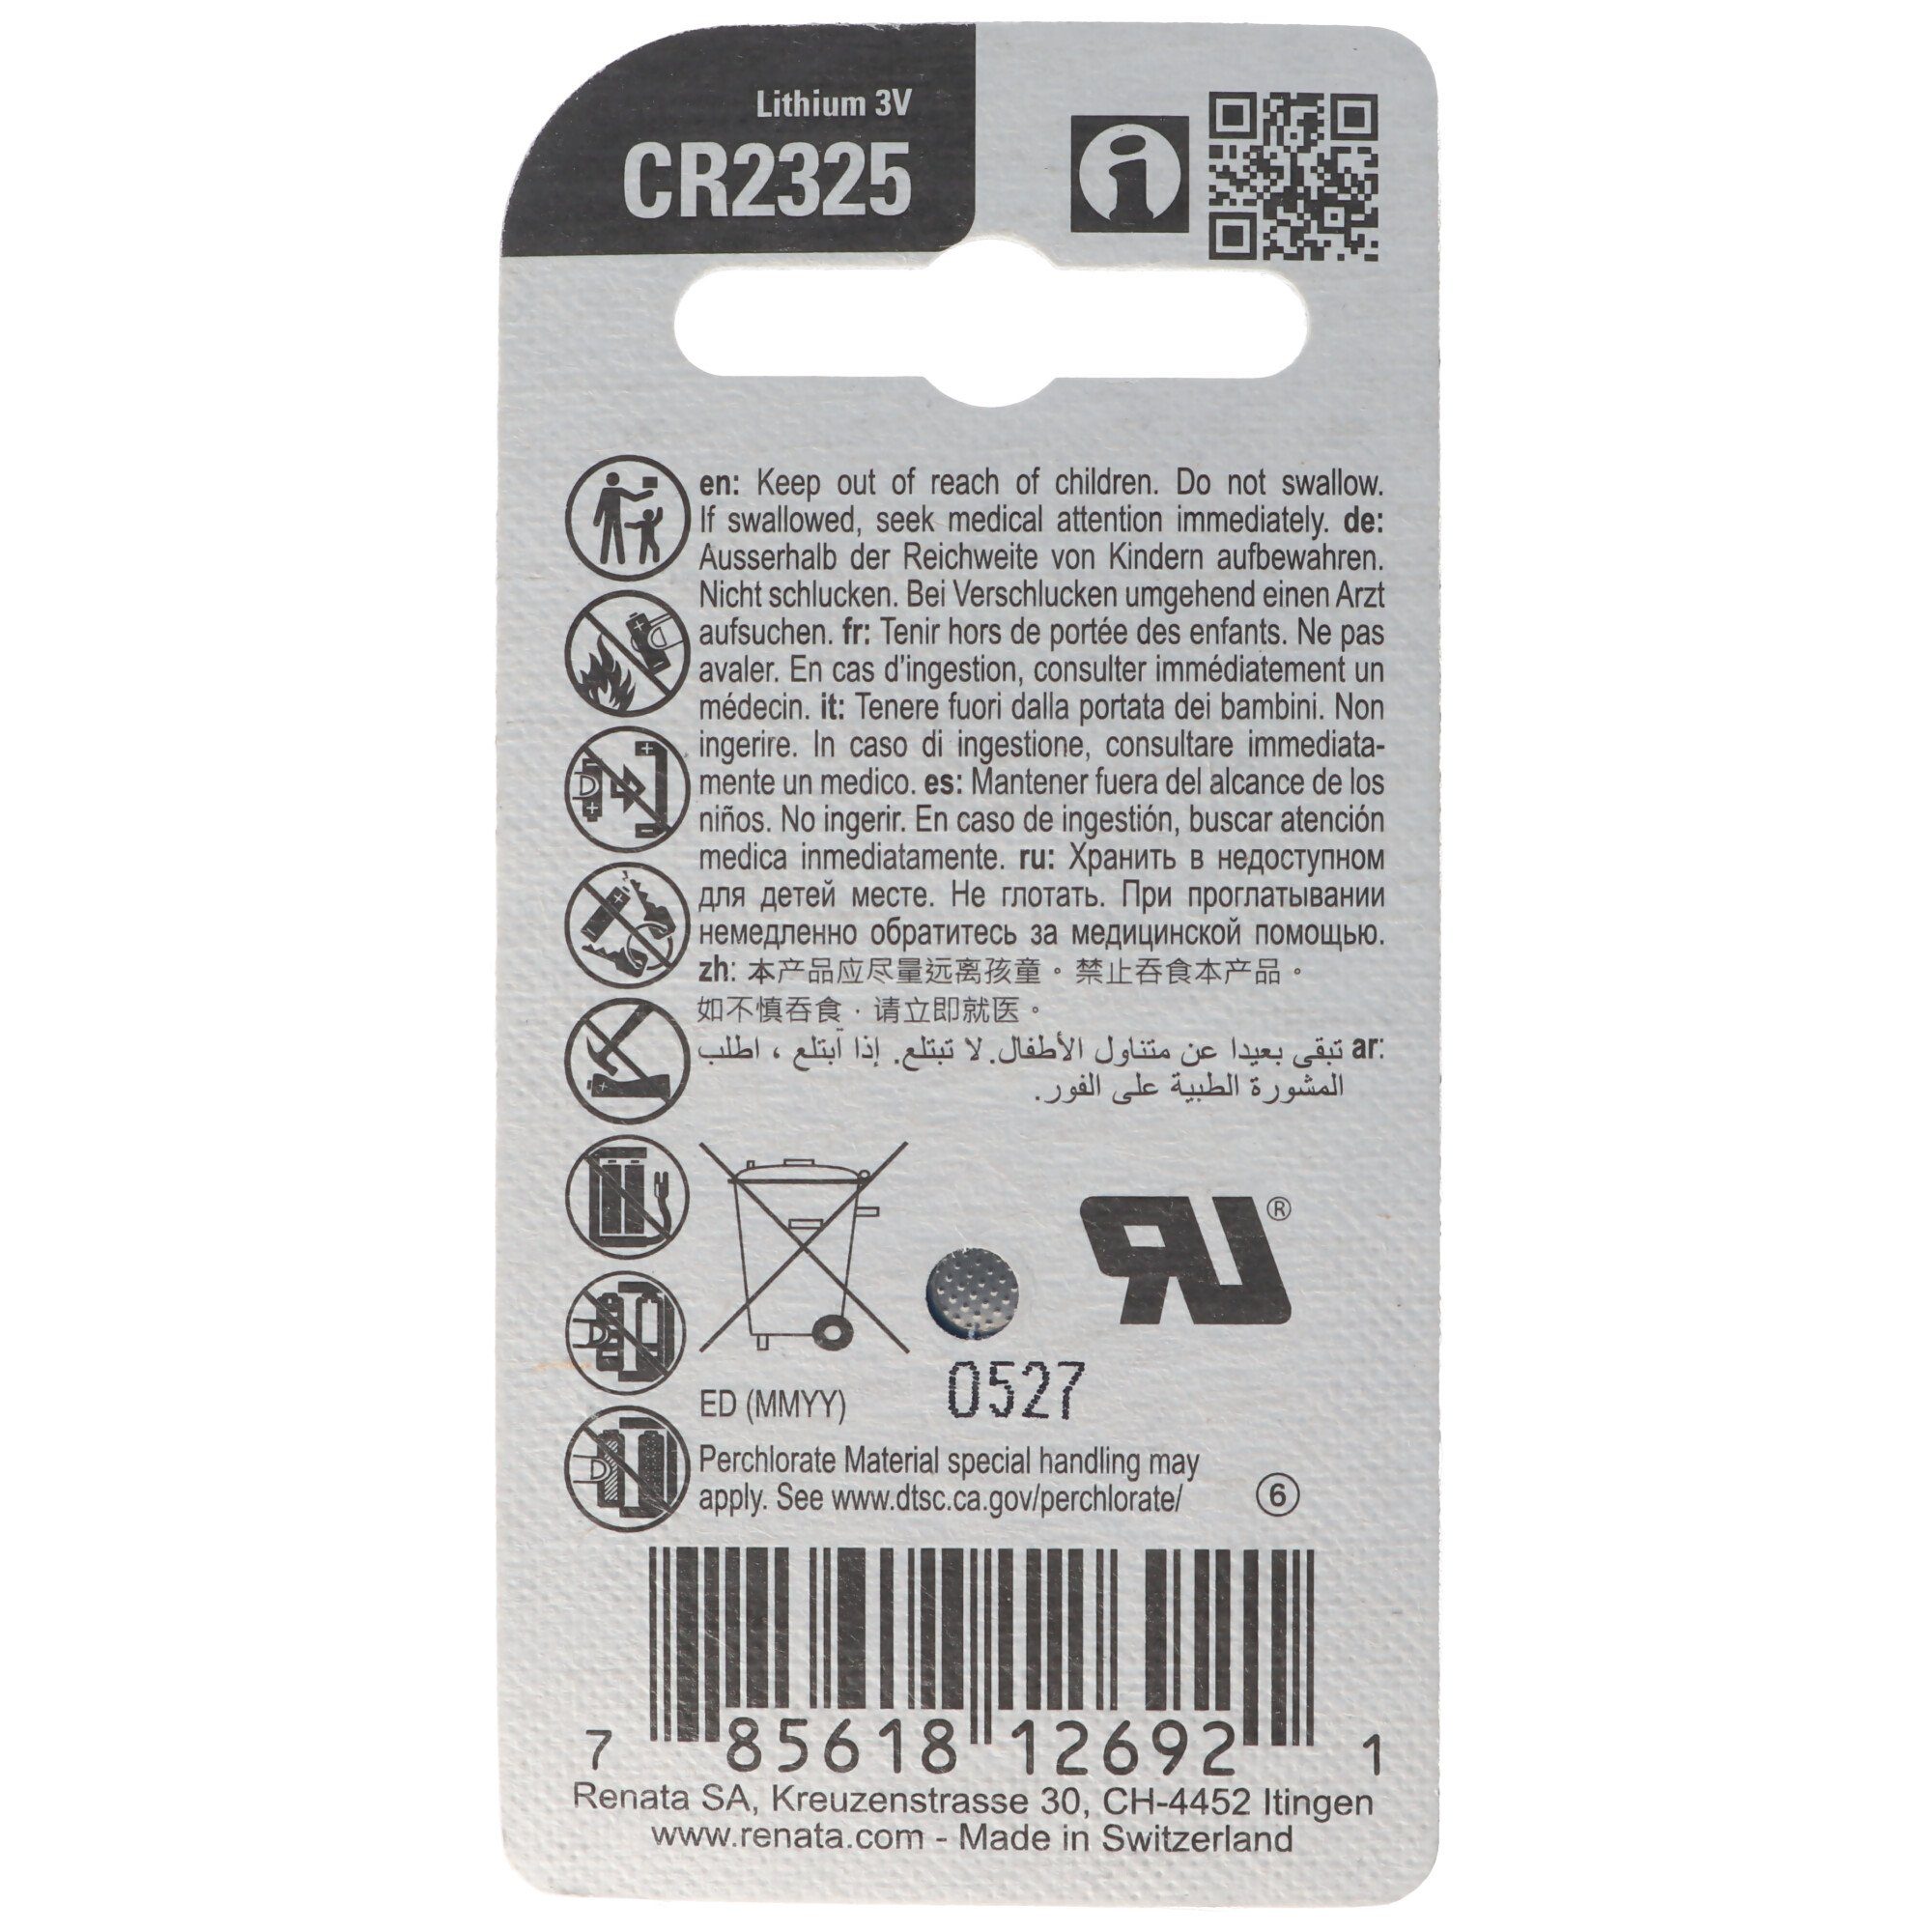 190mAh CR2325, Lithium V) (3,0 IEC Batterie CR2325 Renata Batterie, Renata max. BR2325